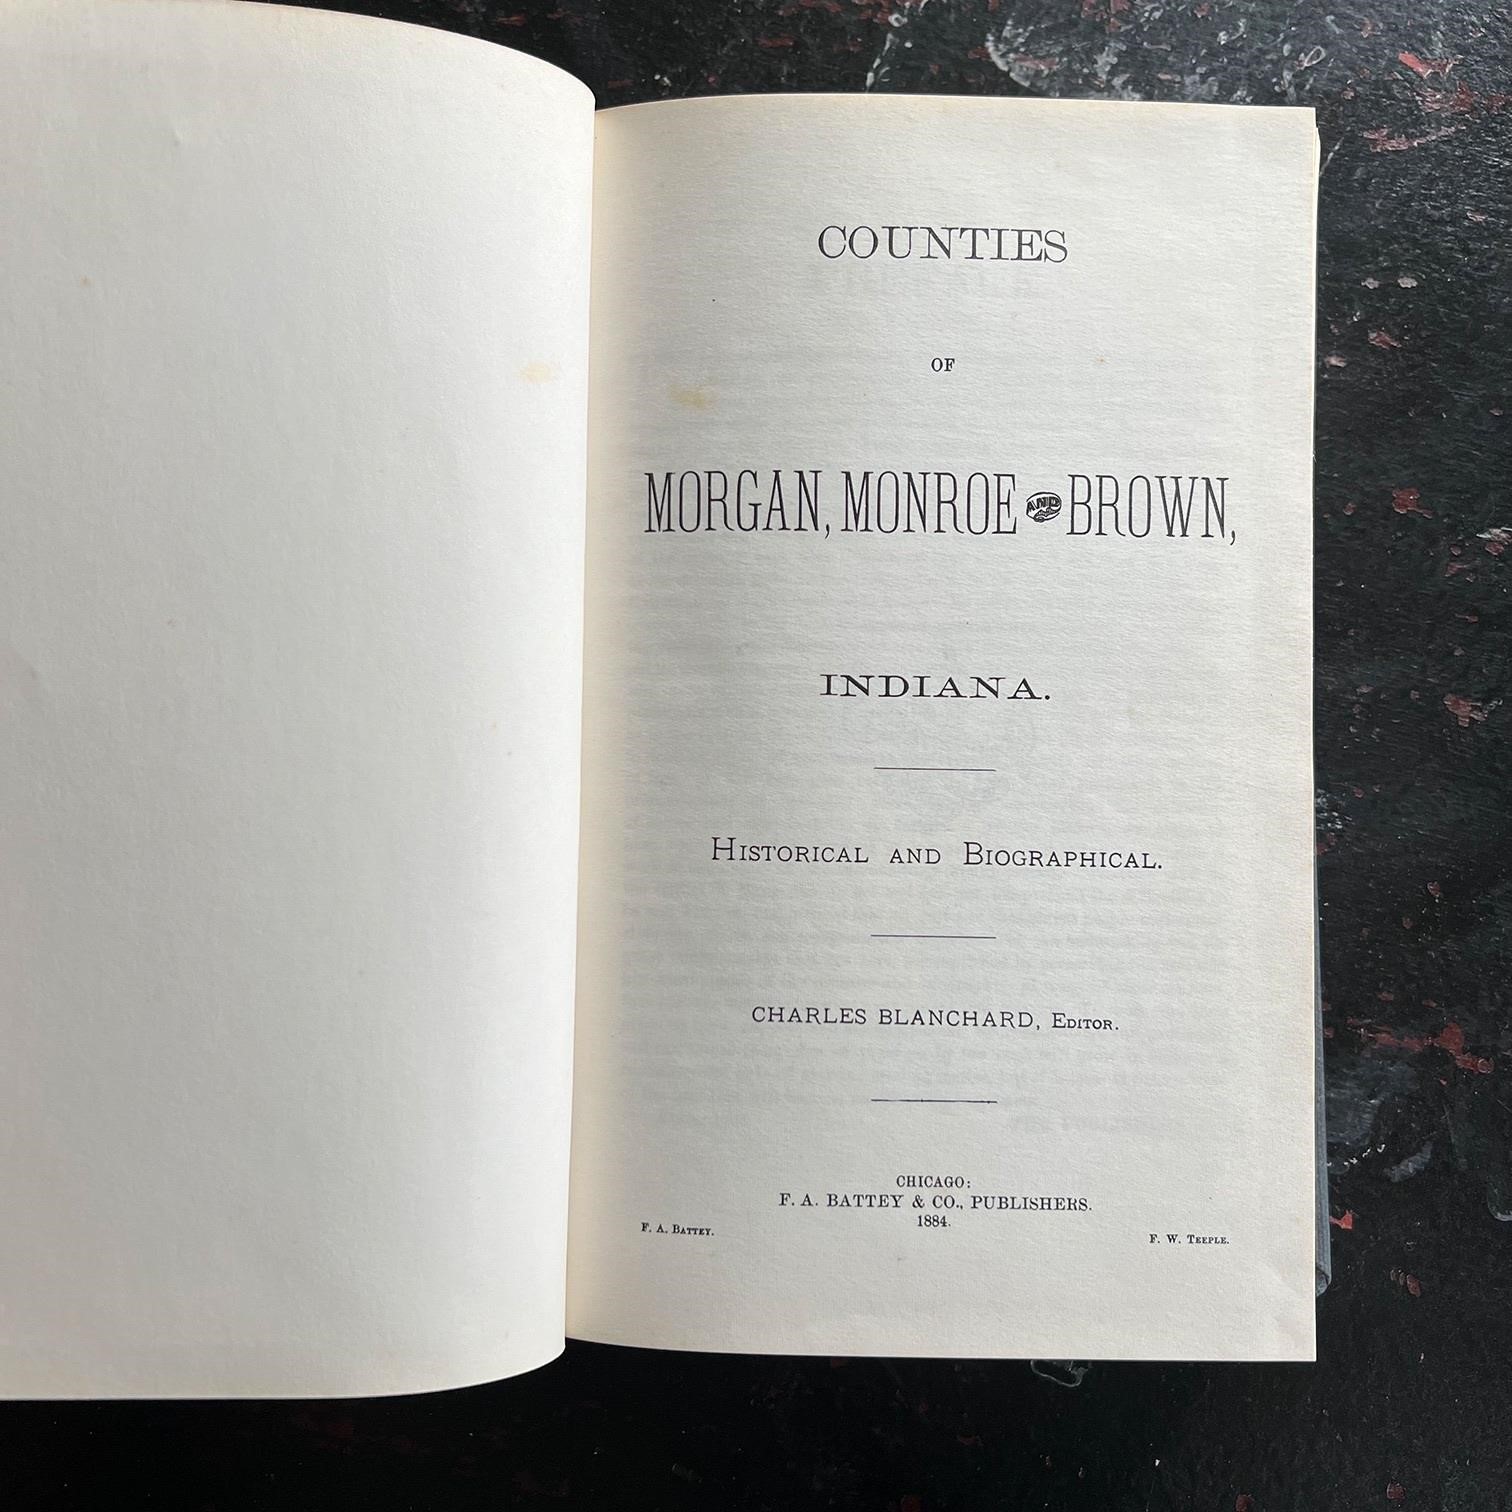 "Counties of Morgan, Monroe, and Brown, Indiana"